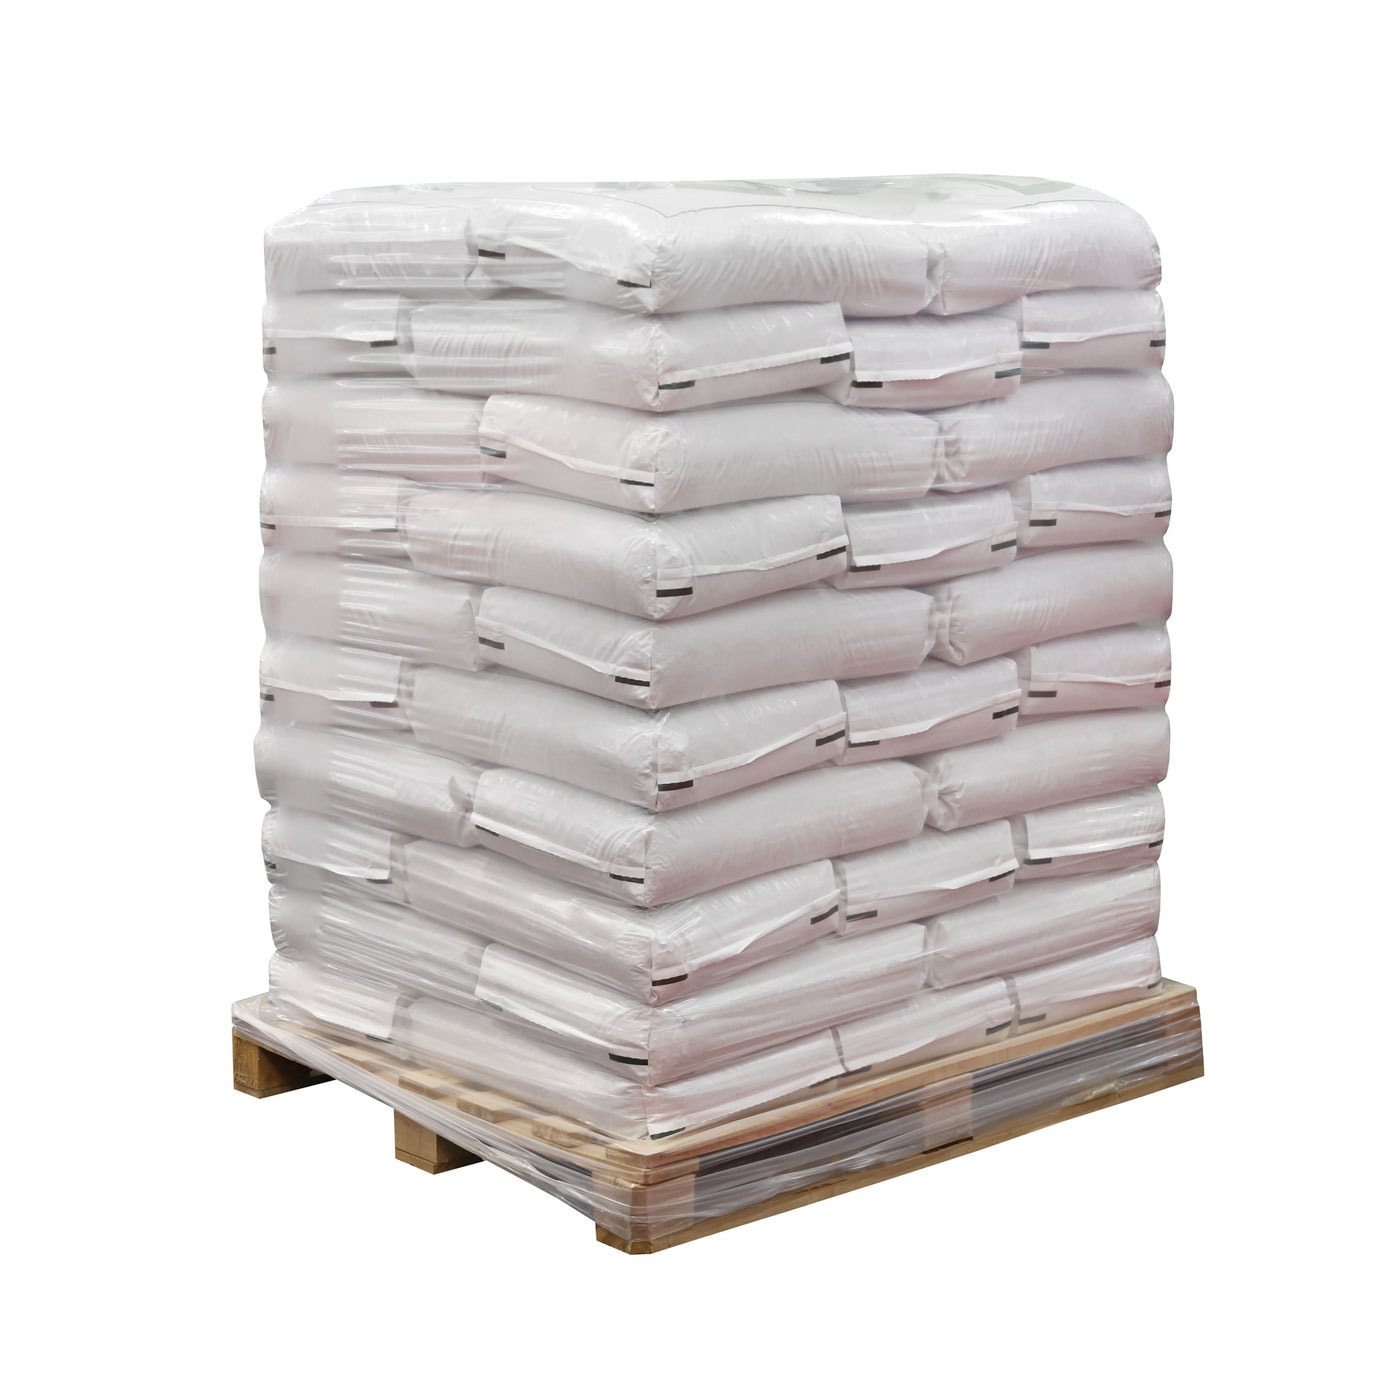 Indusry use big bag 1000kg fibc bag super sacks for sand cement and chemical